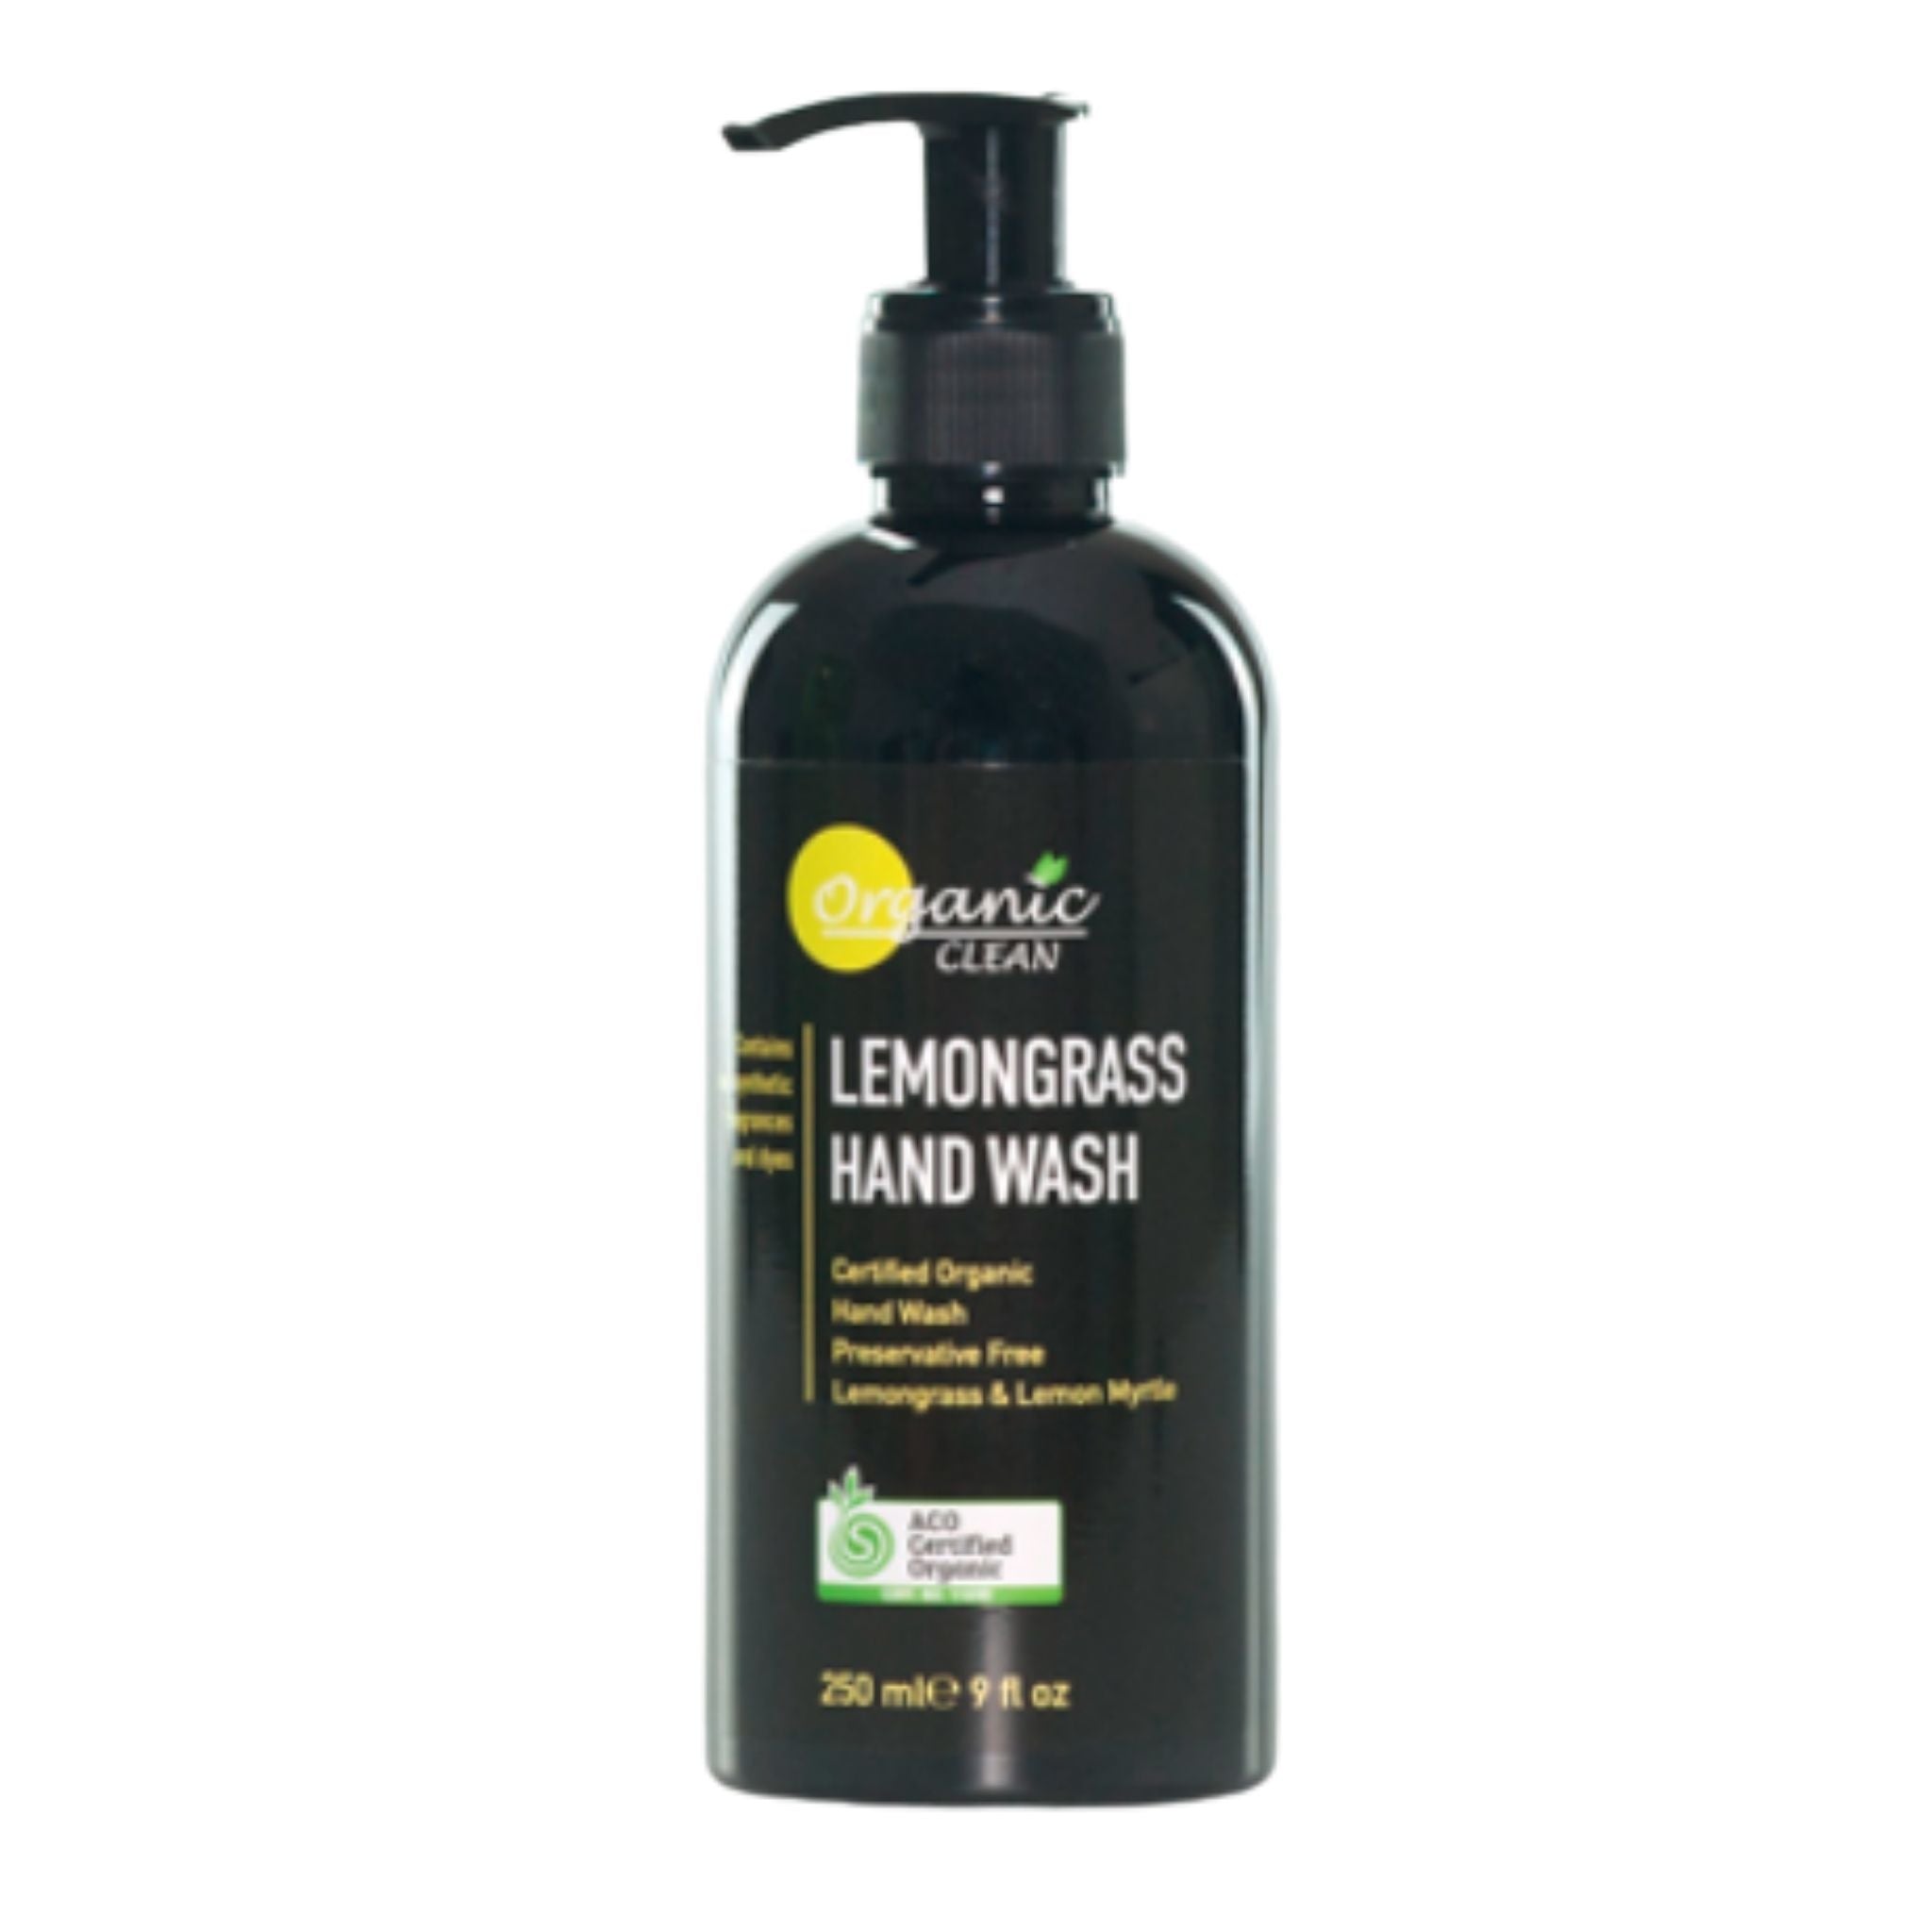 Hand Wash - lemongrass (Cert. Organic)